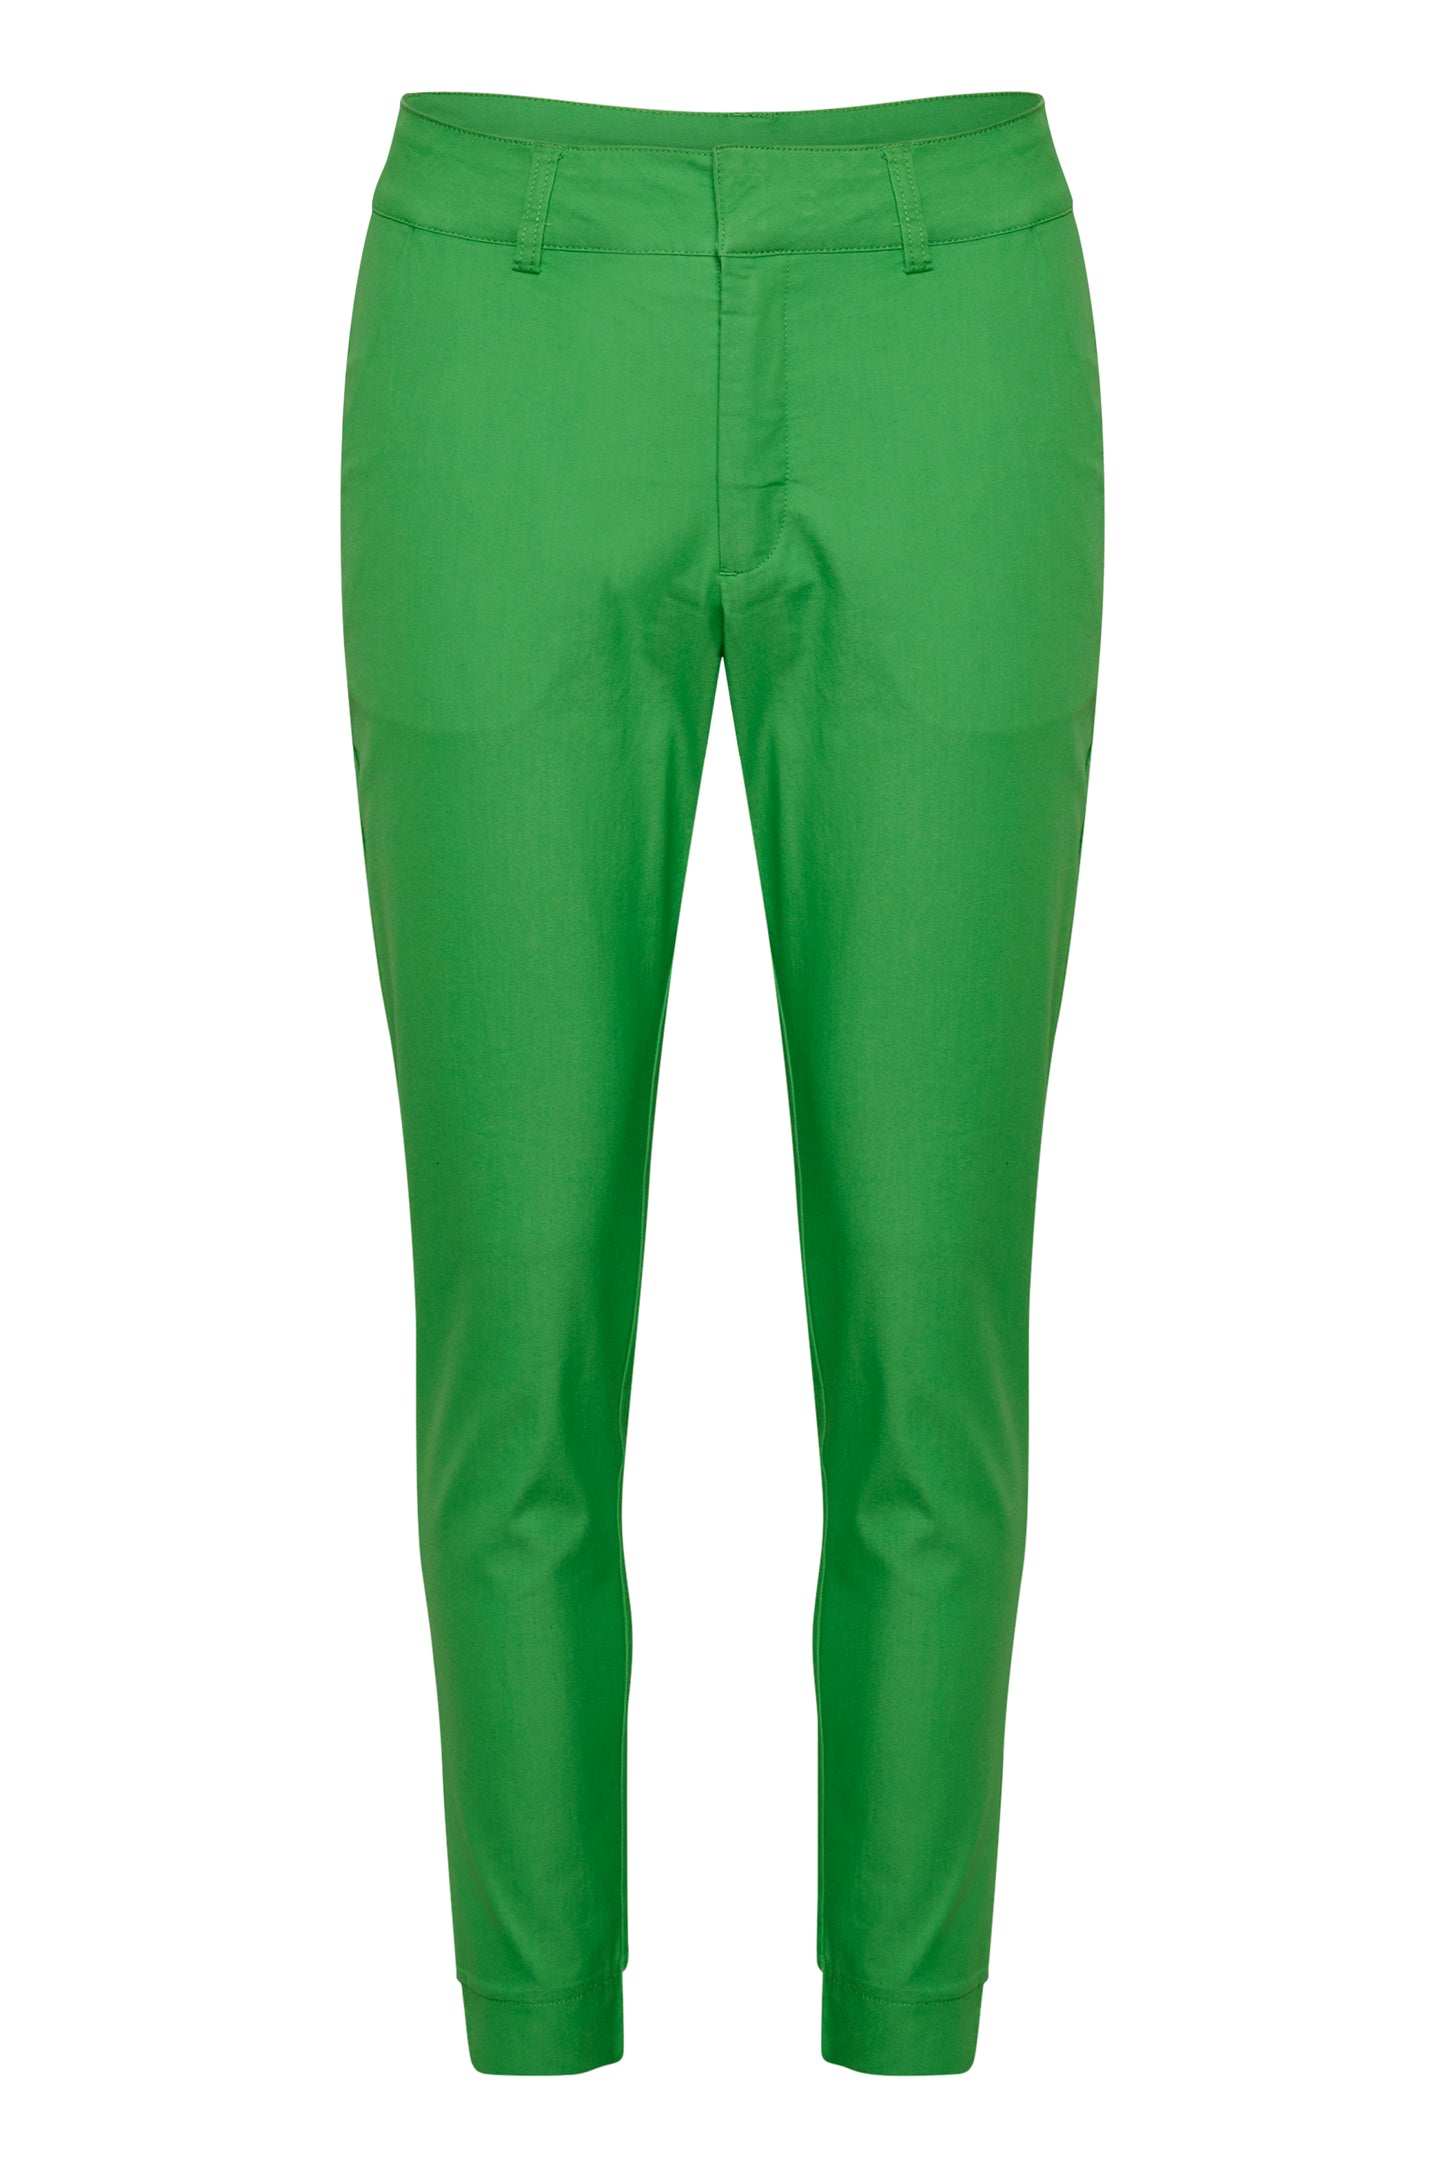 KAFFE KALEA Poison Green Chino Pants